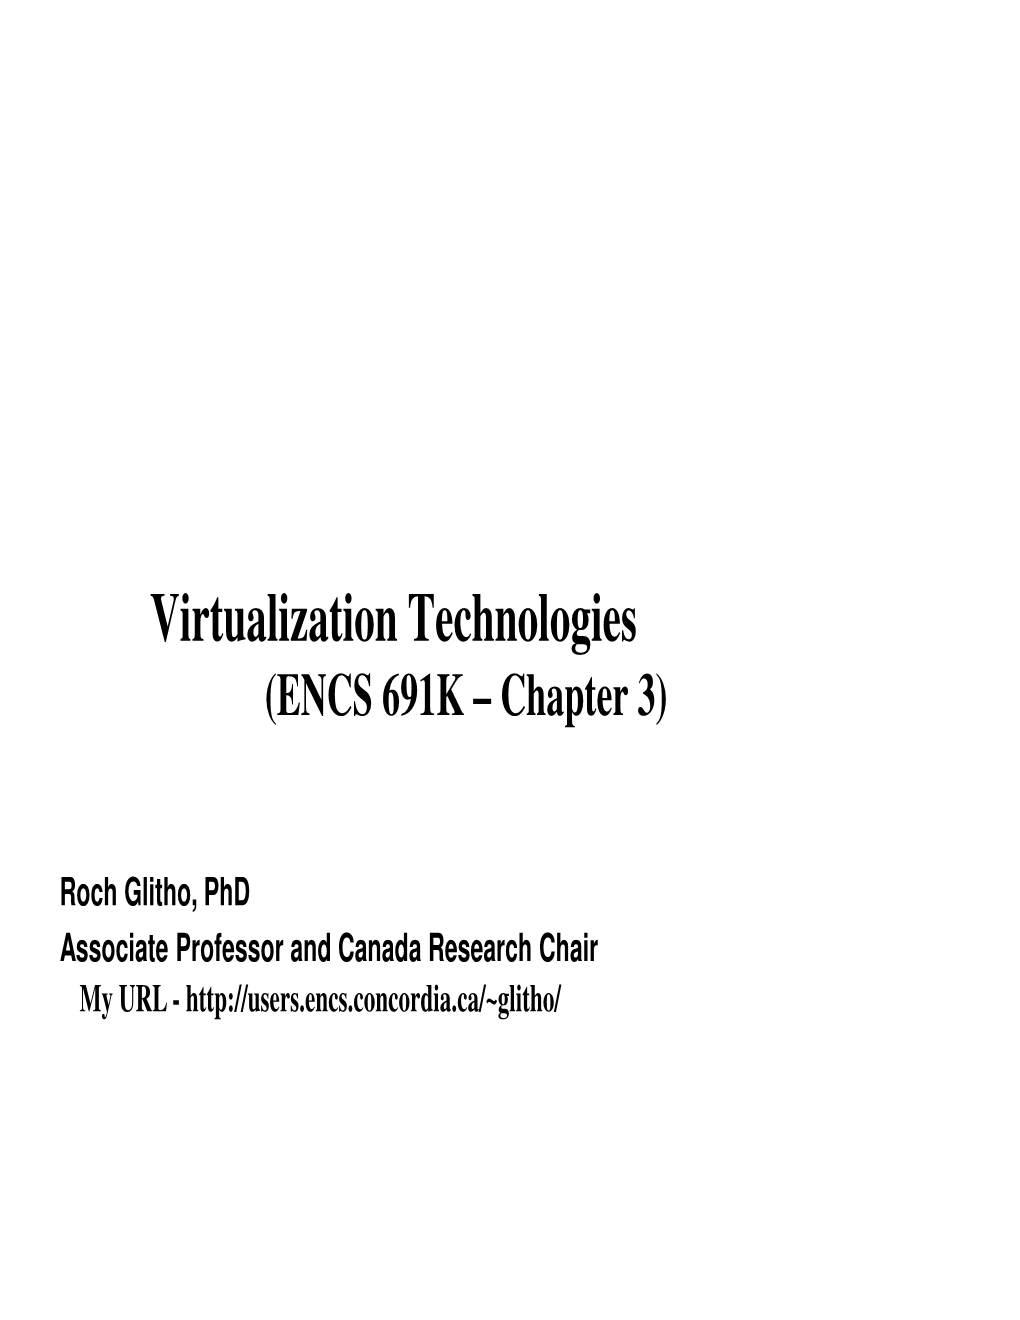 Virtualization Technologies (ENCS 691K – Chapter 3)